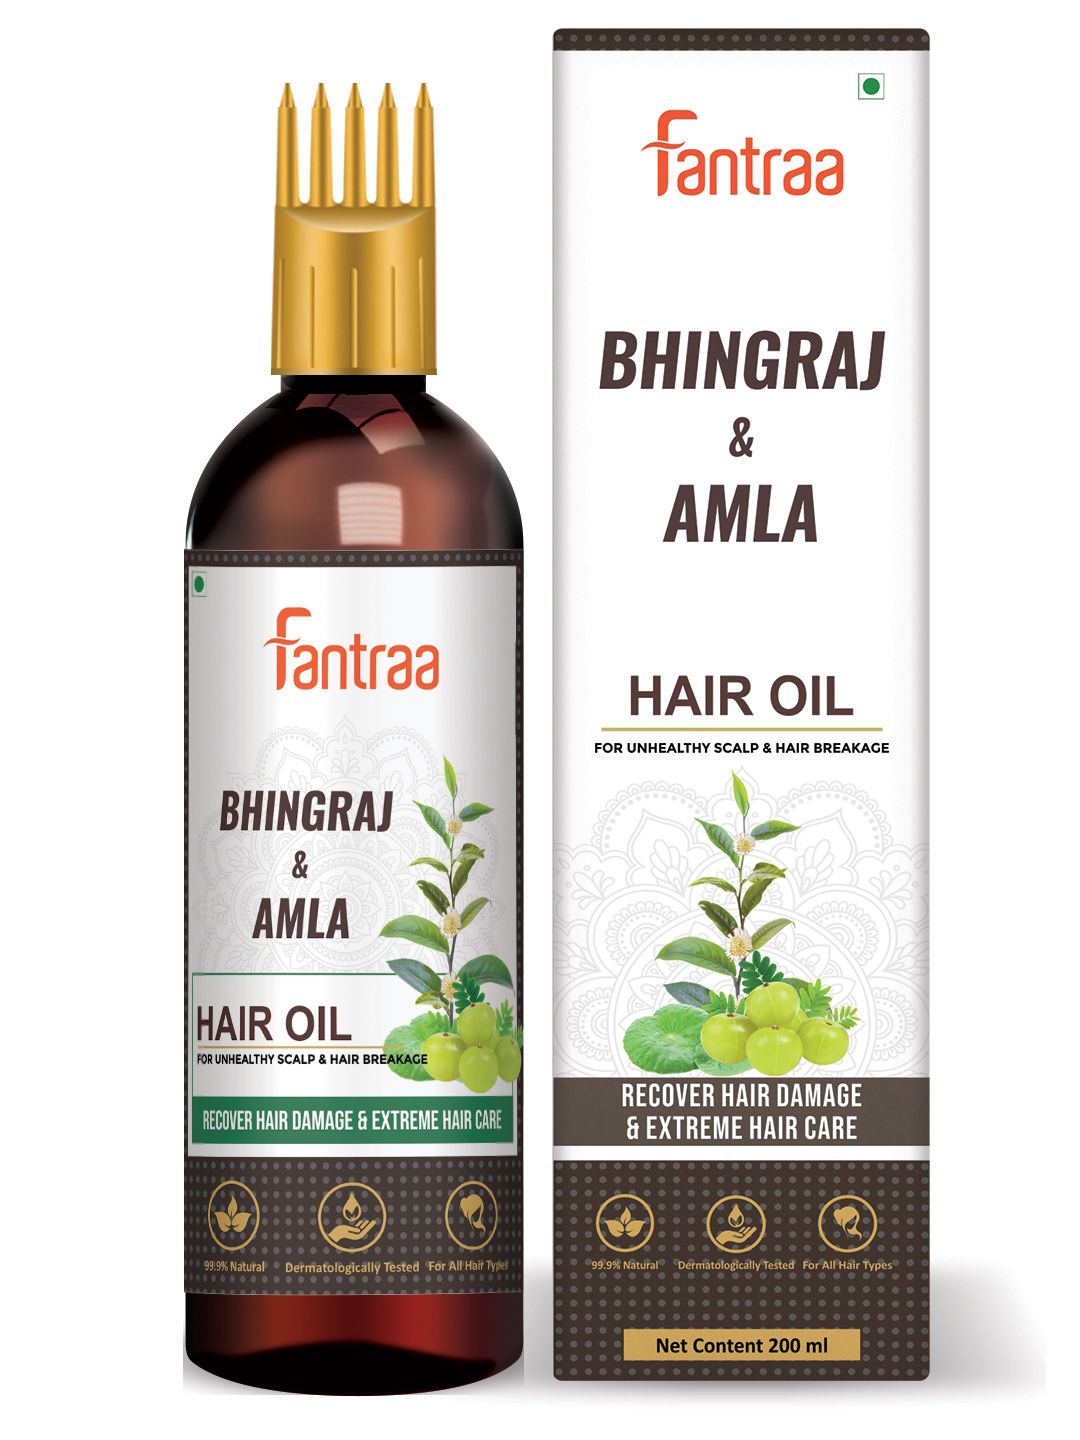 Fantraa Bhringraj & Amla Extreme Hair Care Hair Oil - 200 ml Price in India